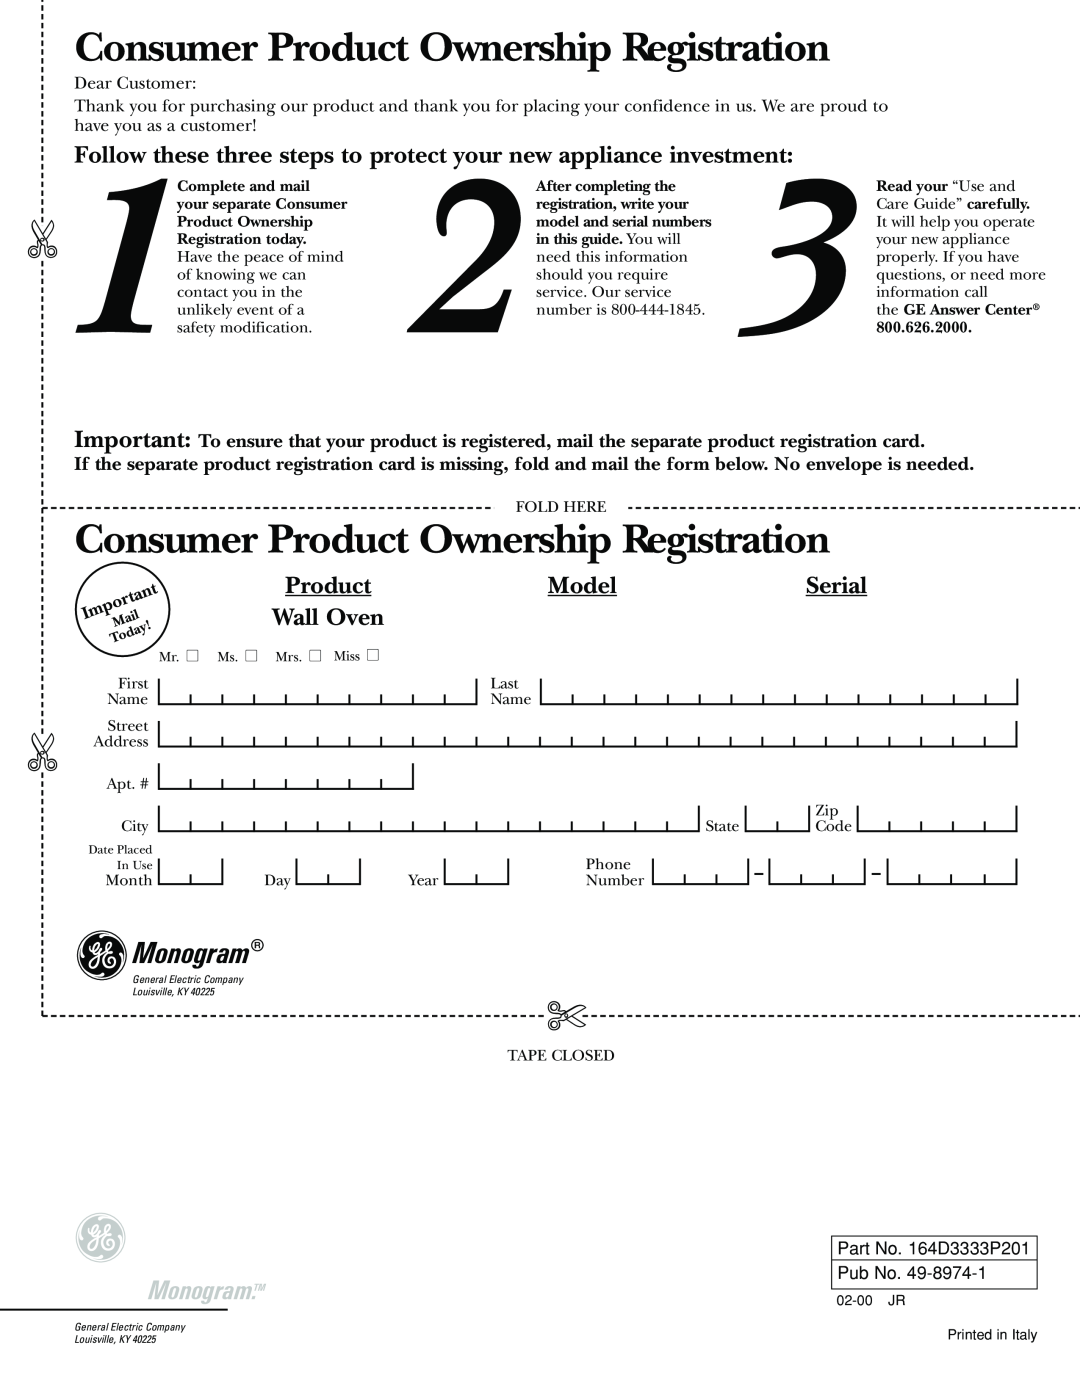 GE Monogram 30 Wall Oven manual Consumer Product Ownership Registration, Monogram.TM, Model, Serial 